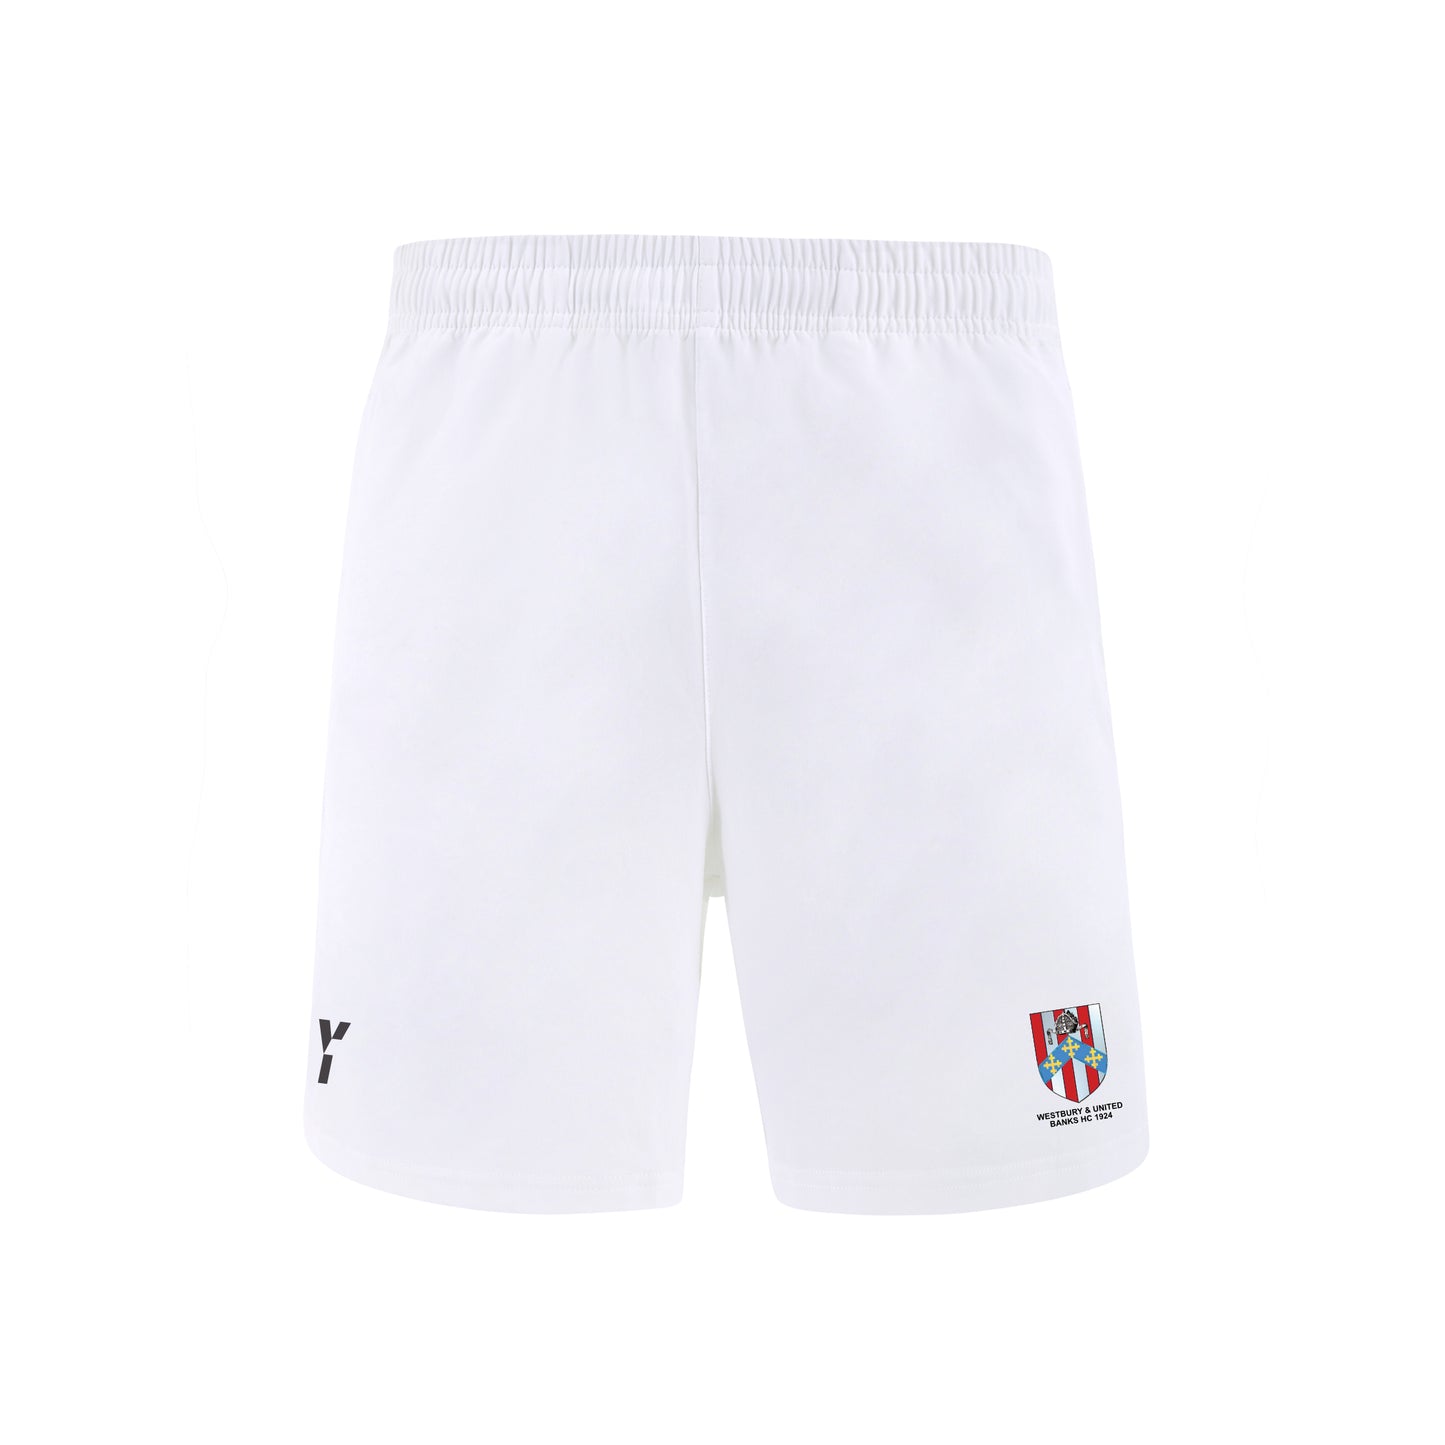 Westbury UB - Shorts Mens White